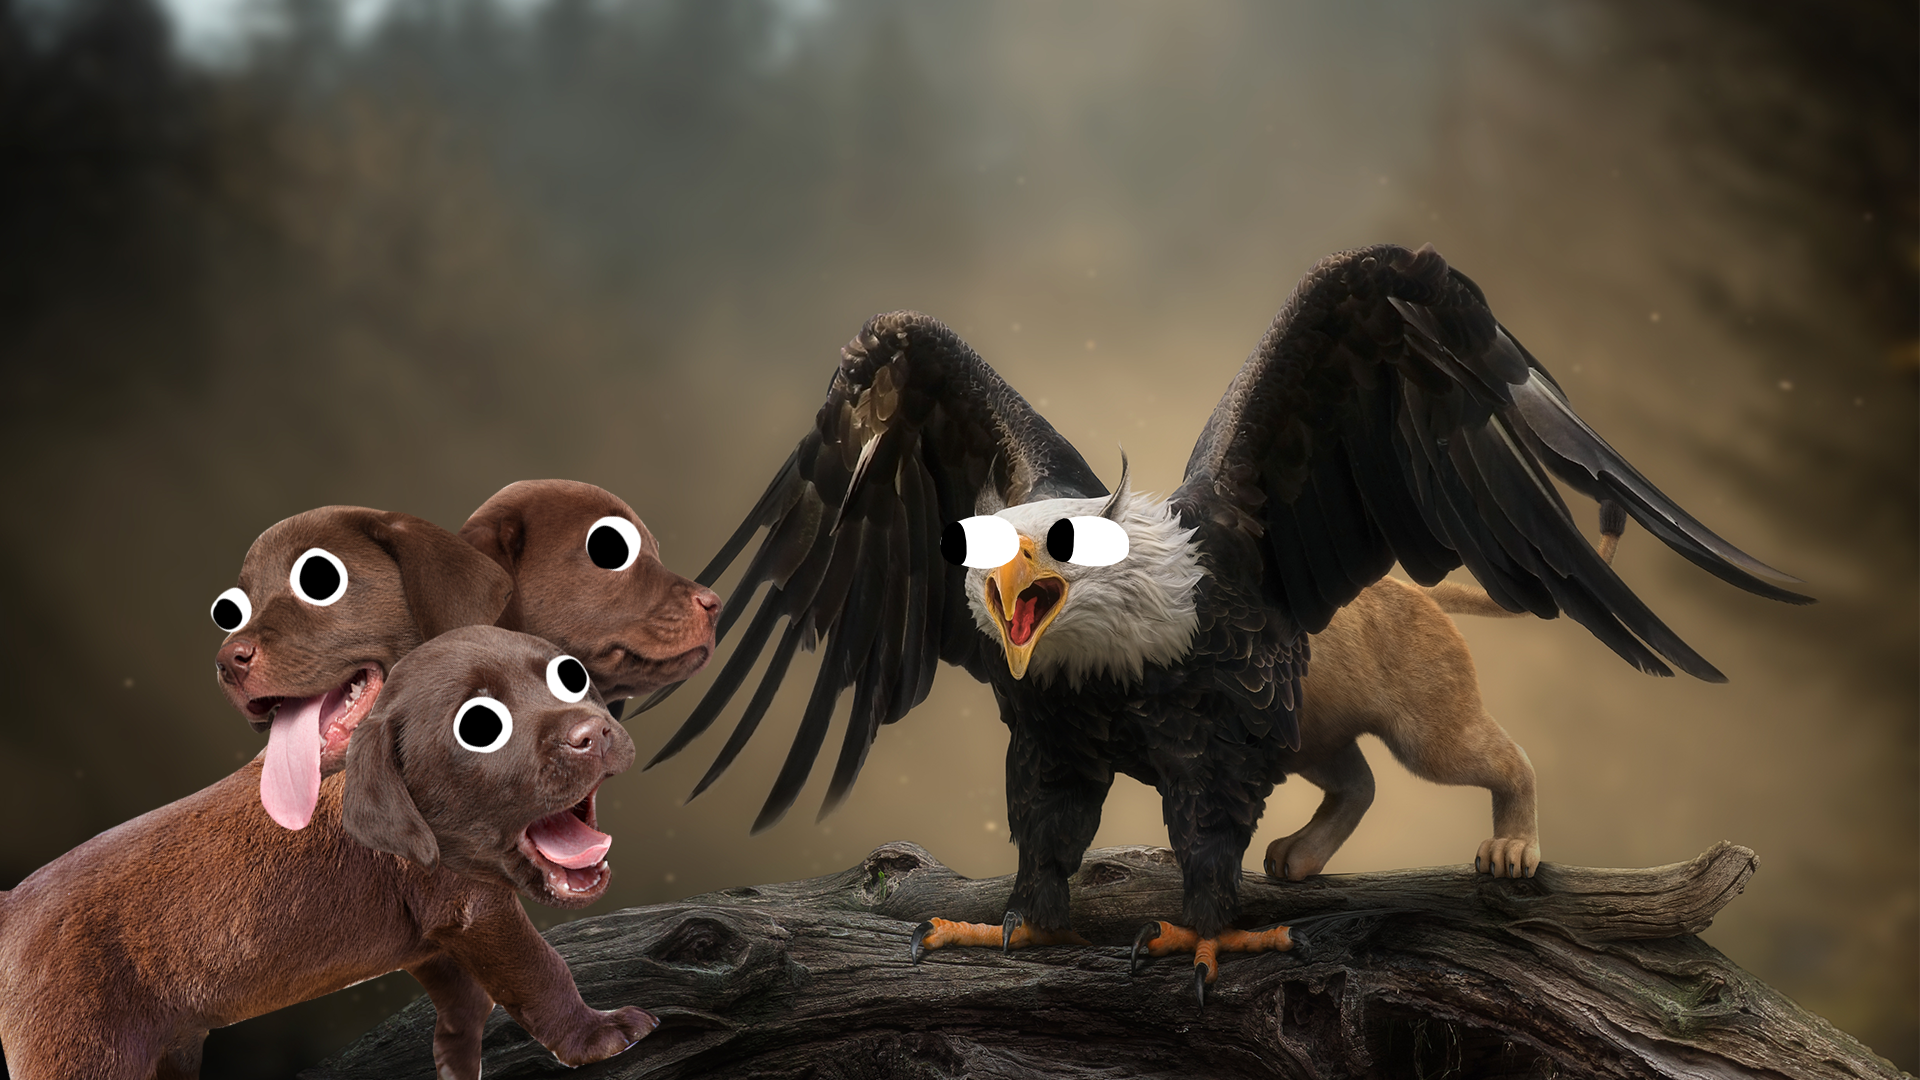 A three-headed dog and an eagle